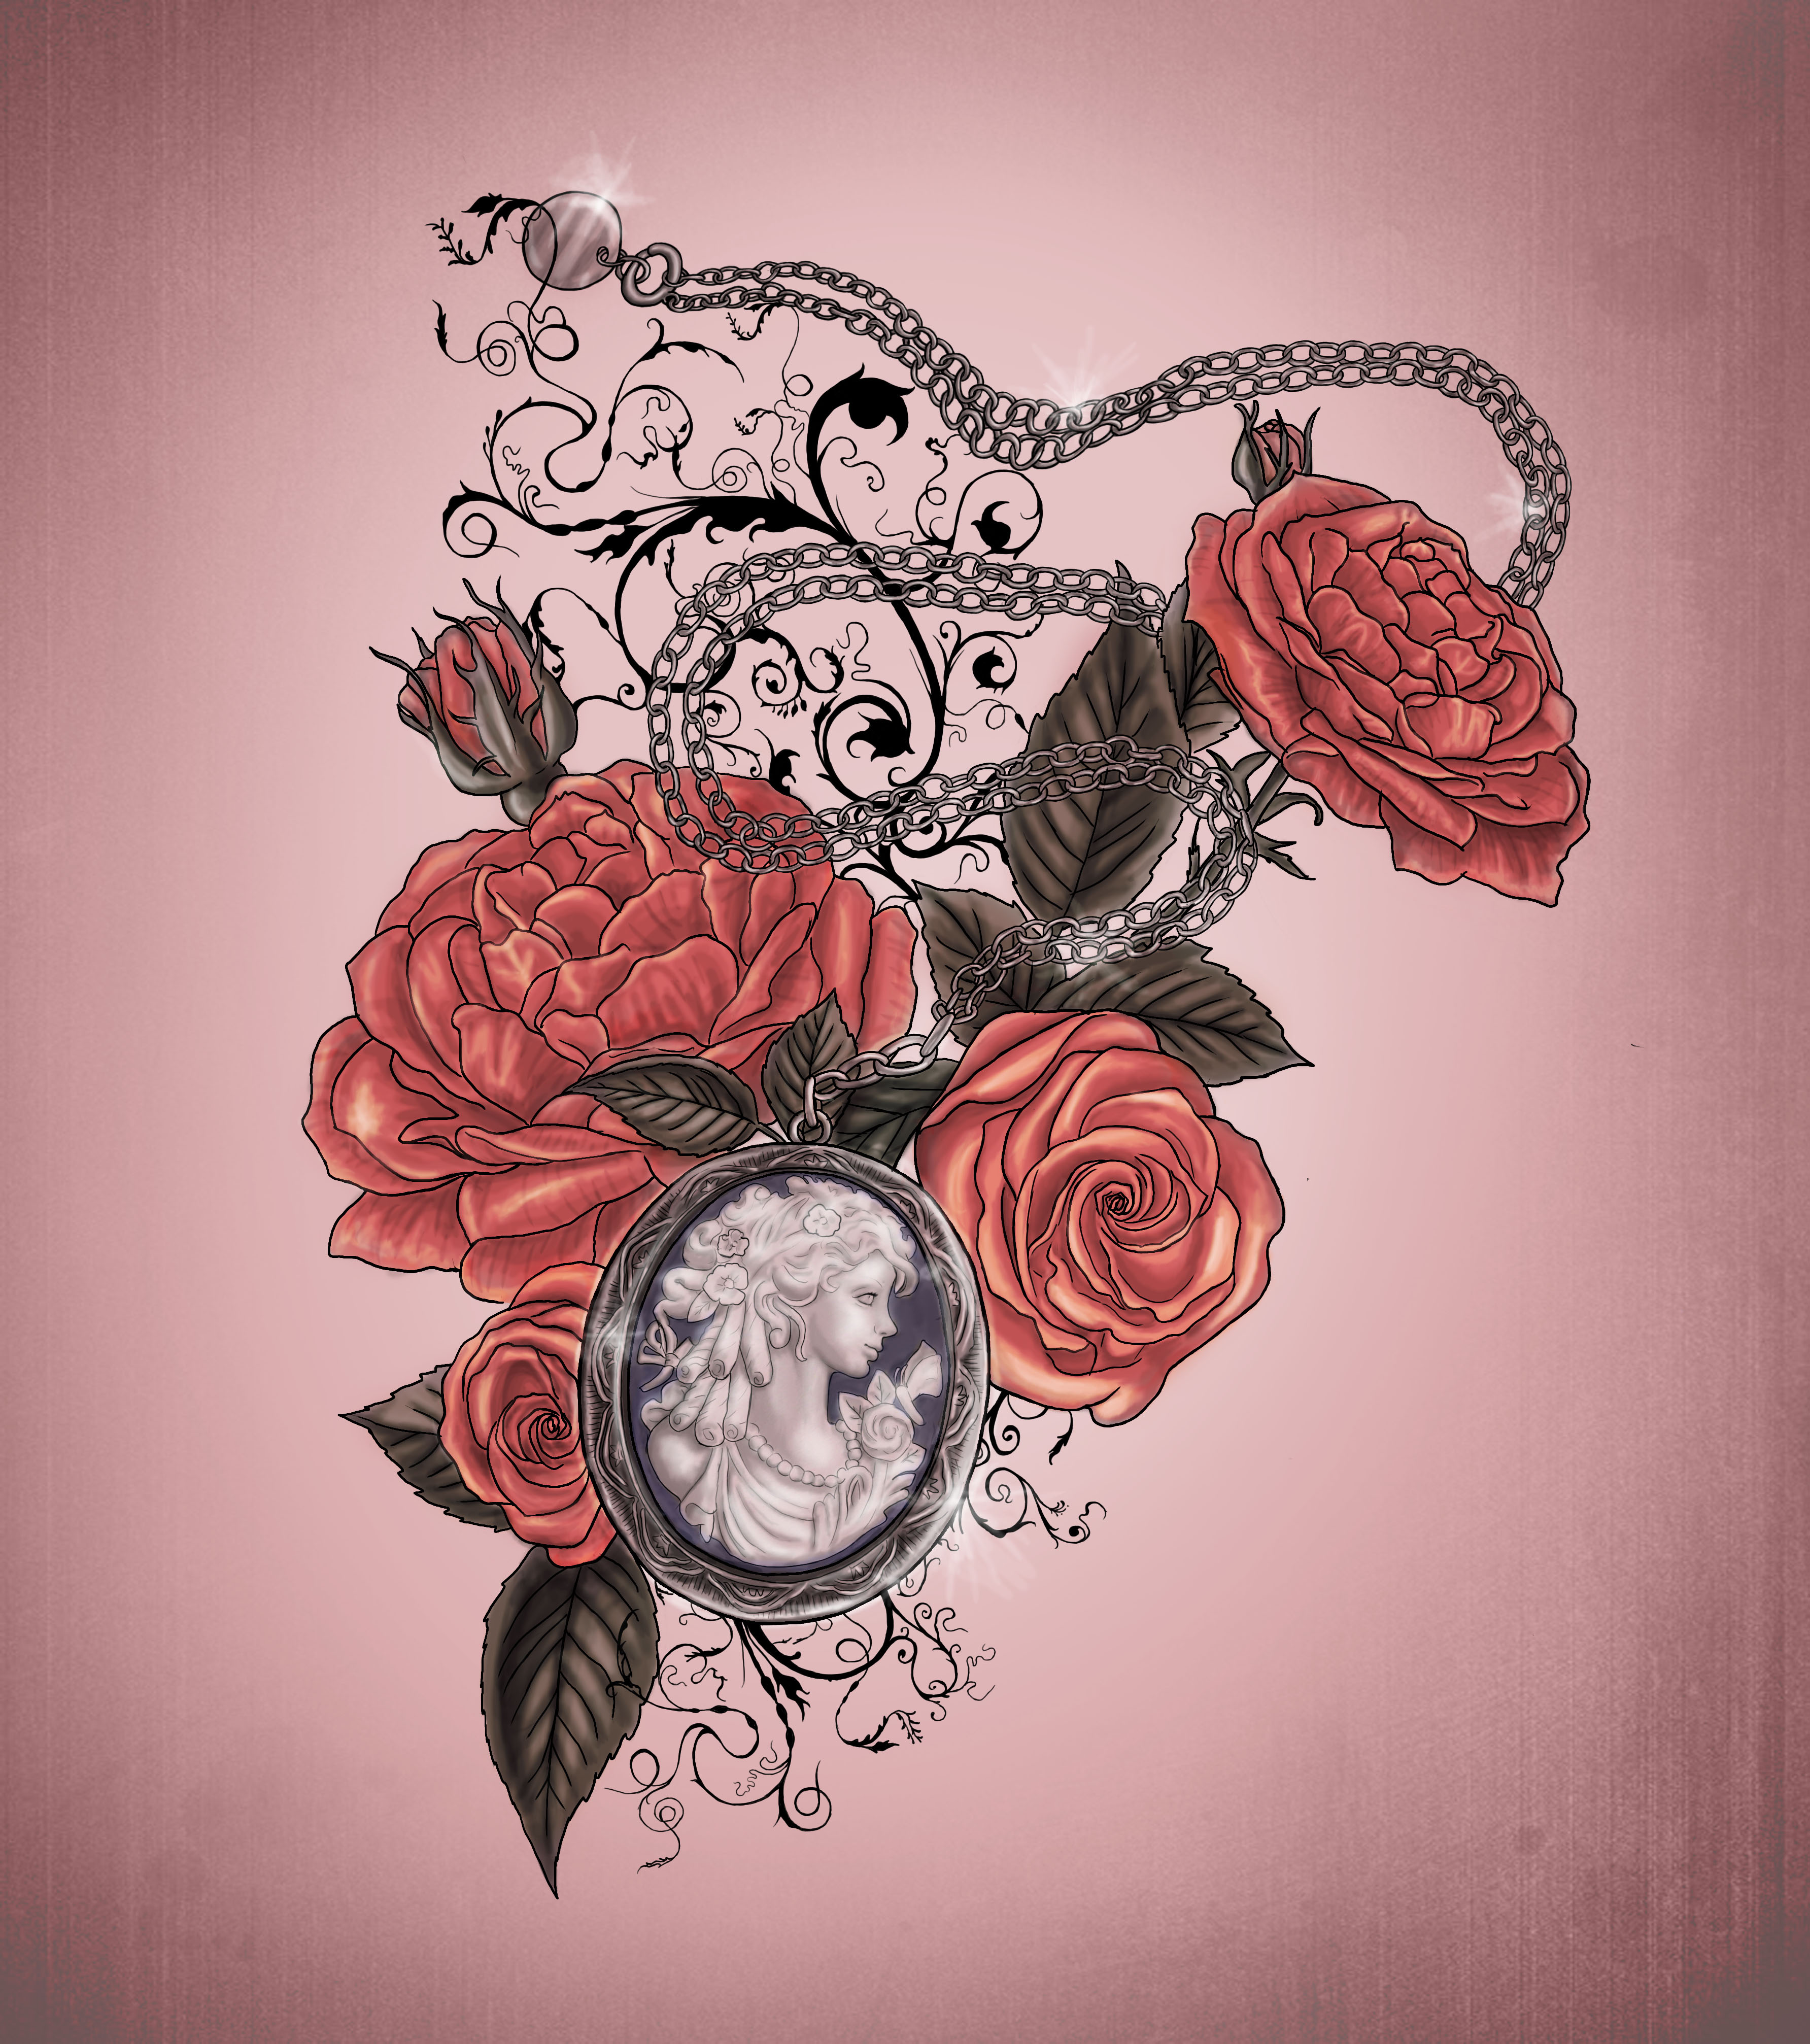 1000+ images about Tattoo art on Pinterest | Victorian ...
 Victorian Flower Tattoo